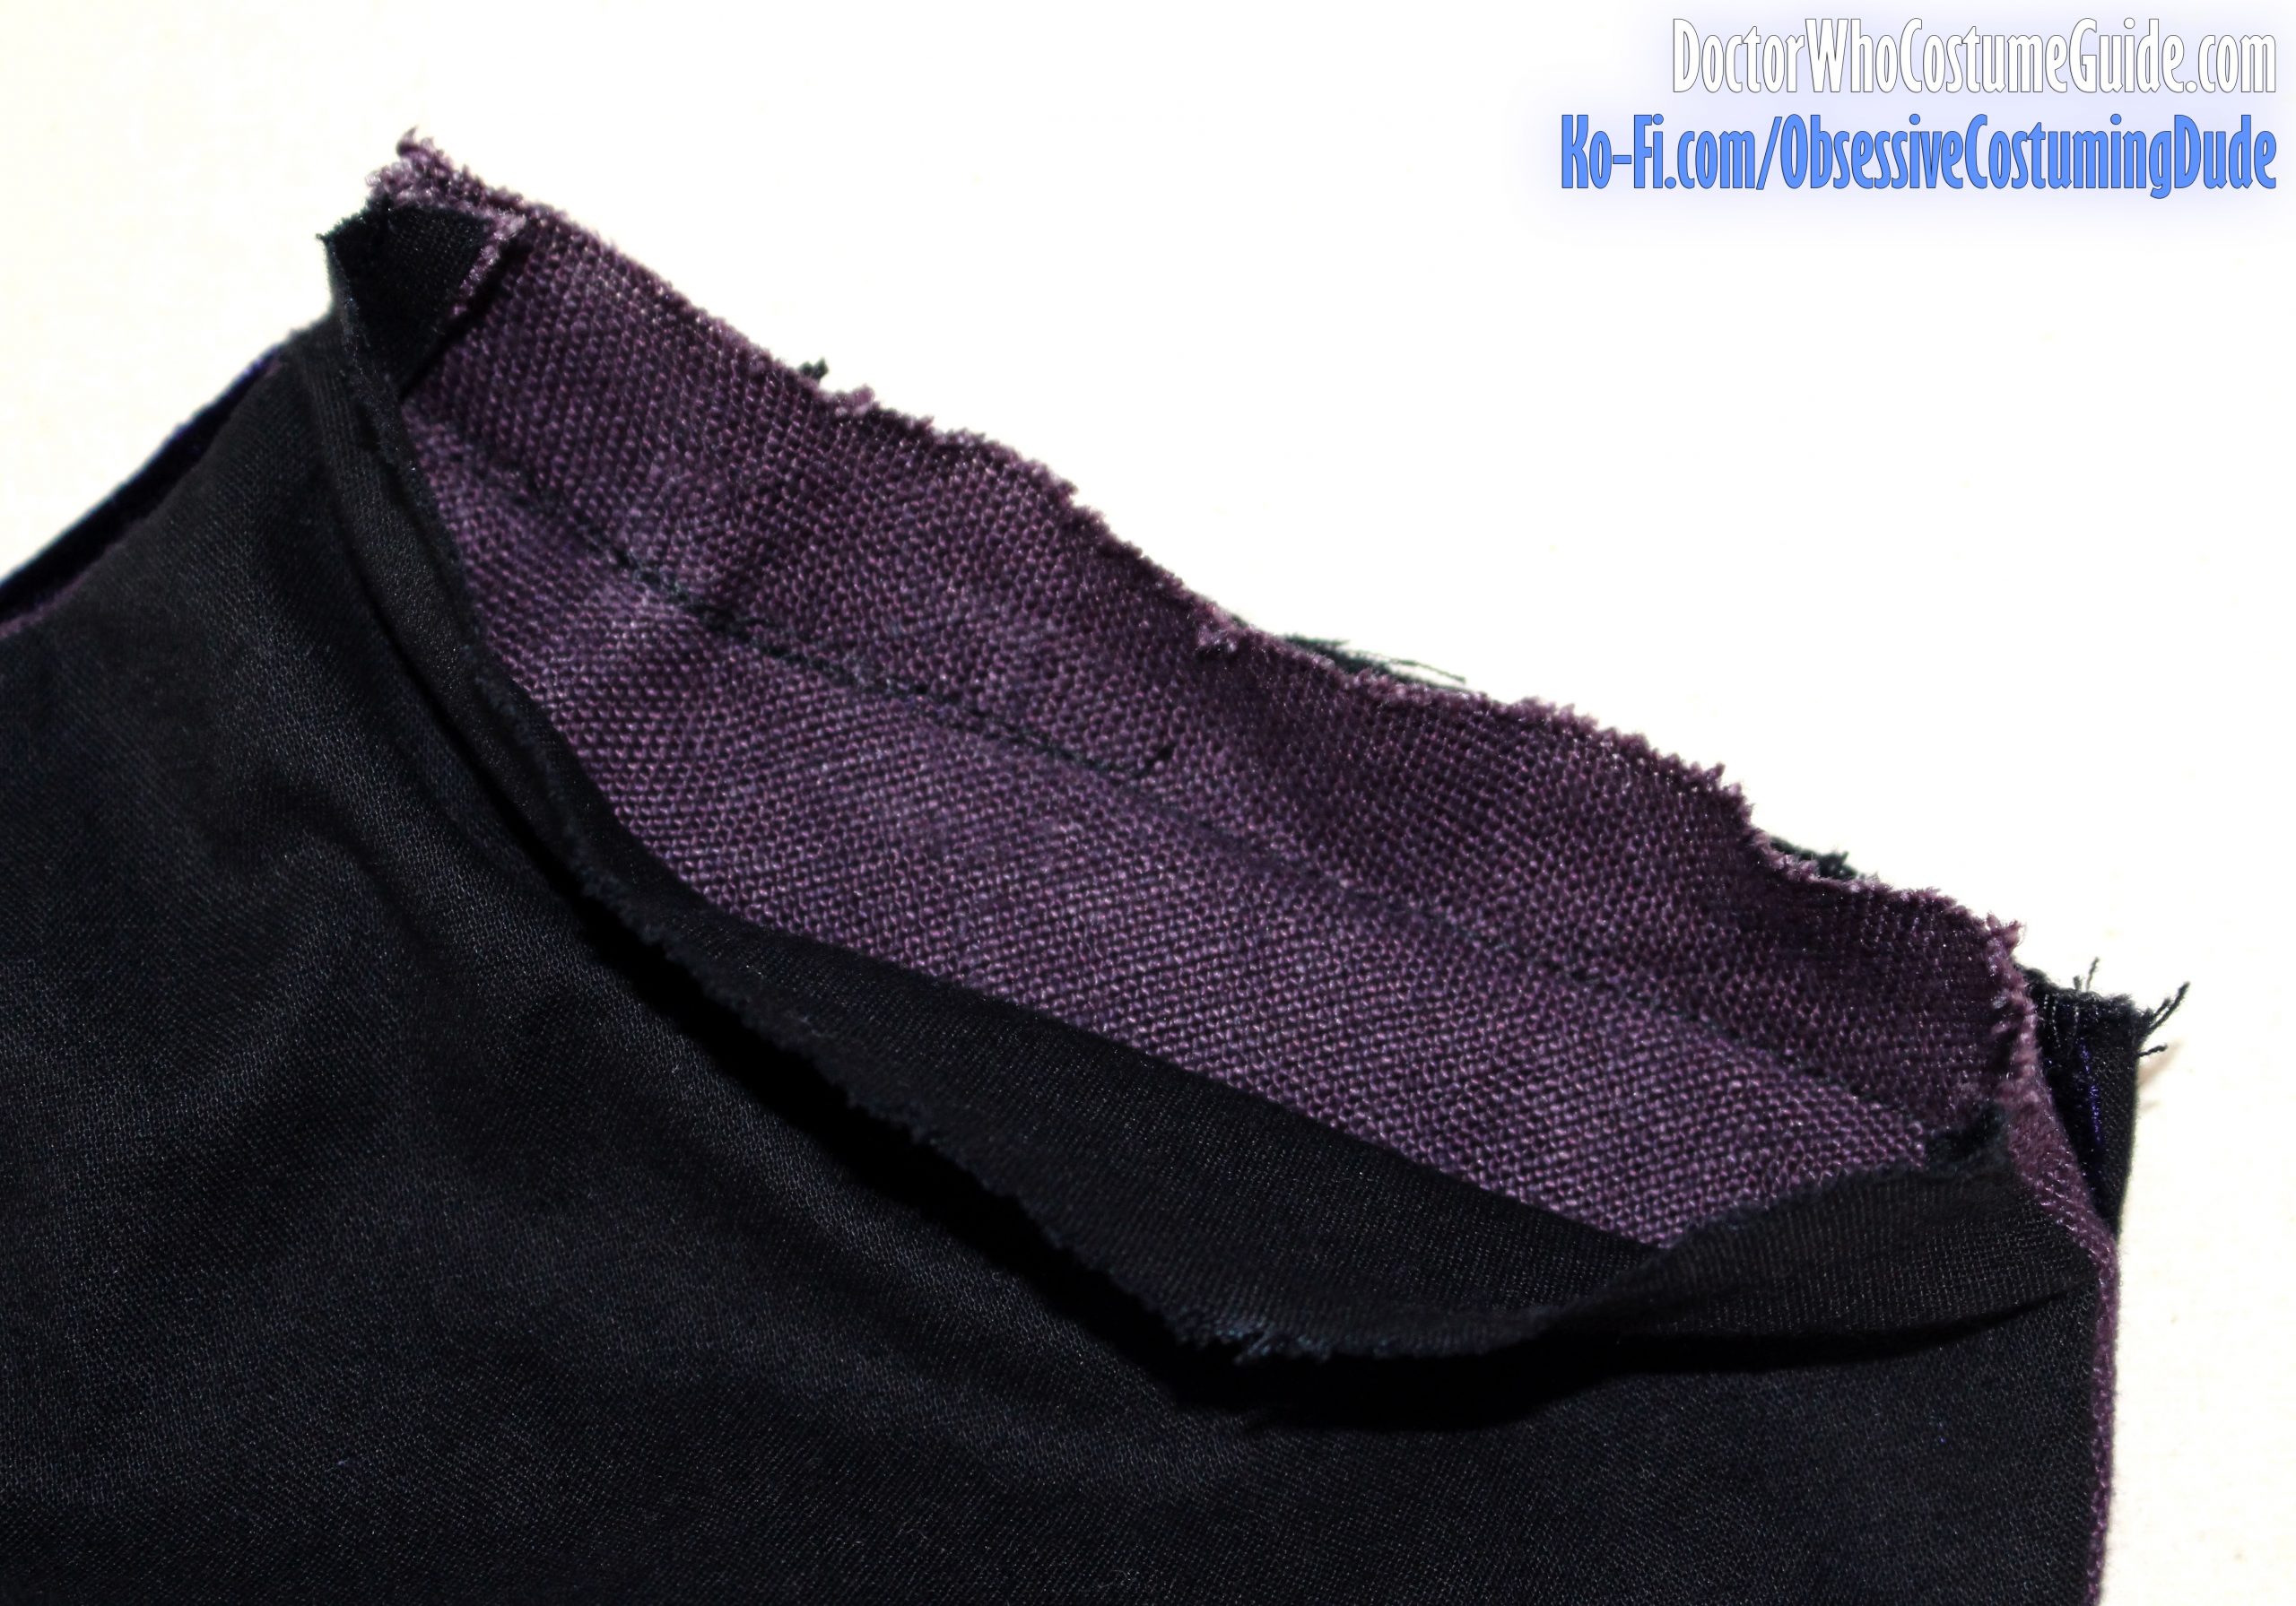 11th Doctor velvet waistcoat sewing tutorial